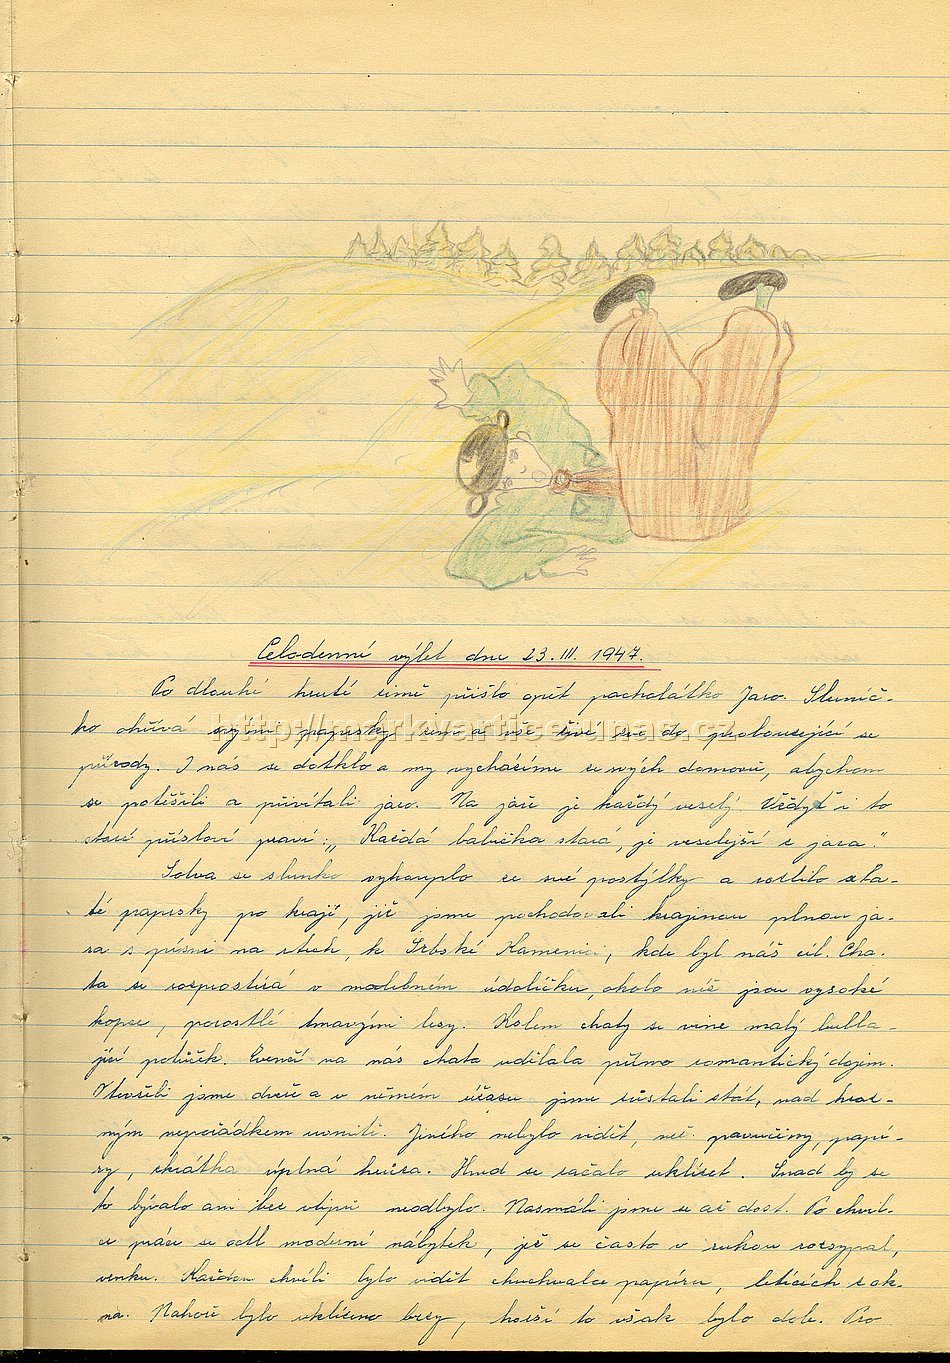 23. III. 1947 - vlet na skautskou chatu
chata v malebnm dol